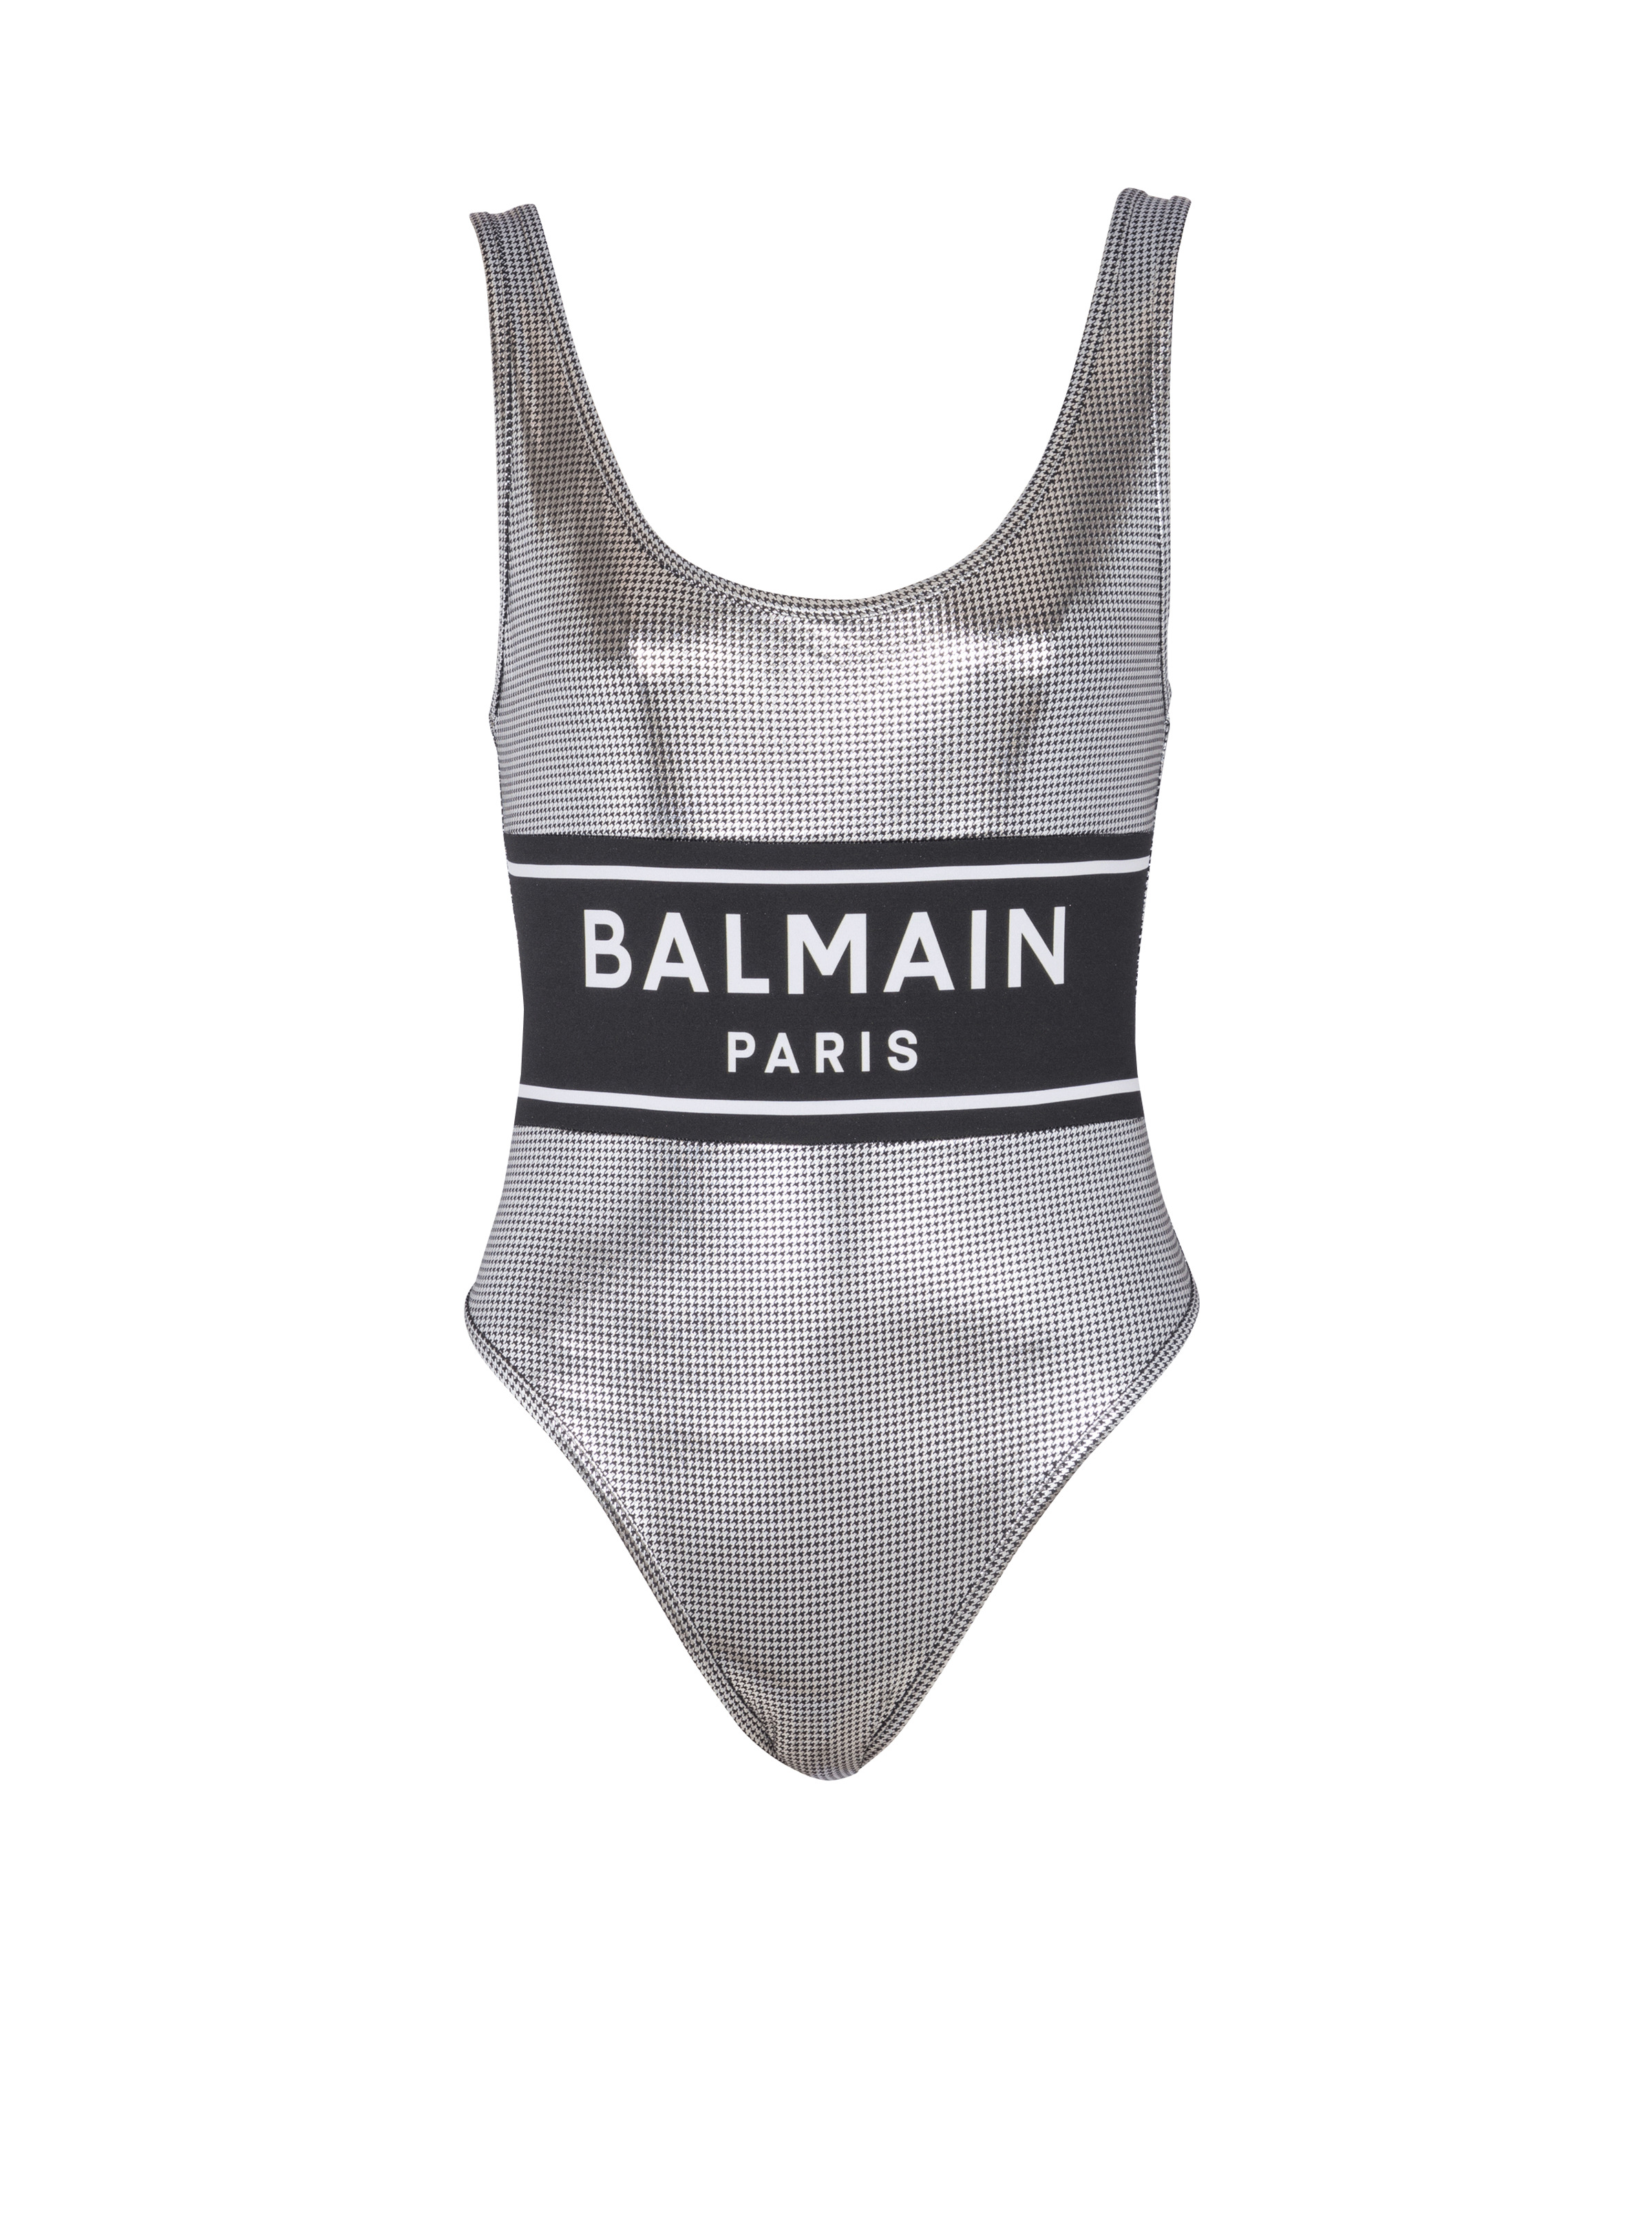 Balmain Paris swimsuit - 1